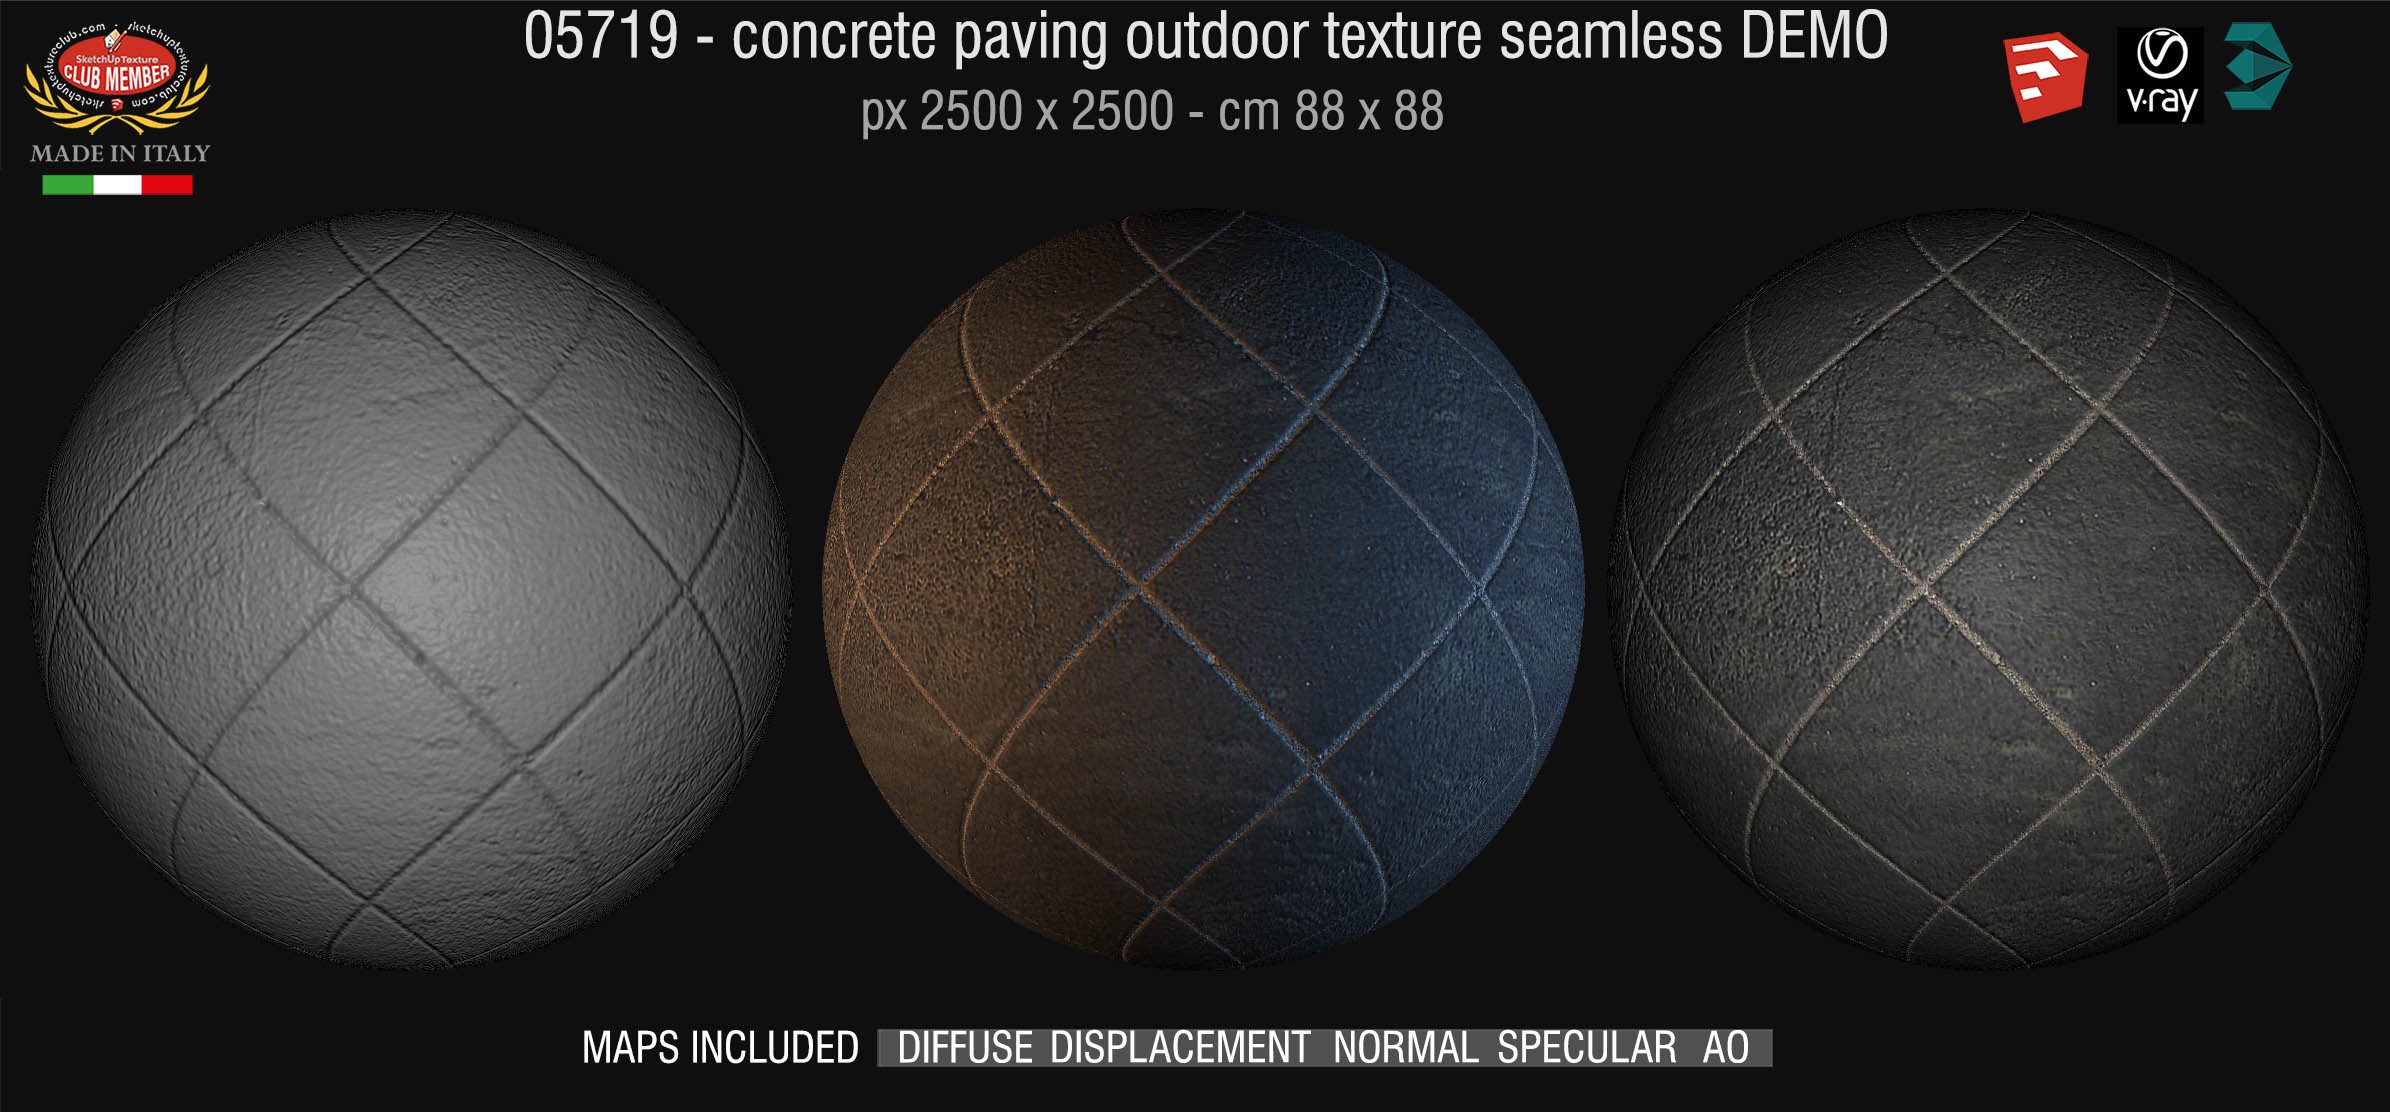 05719 HR Paving outdoor concrete regular block texture + maps DEMO